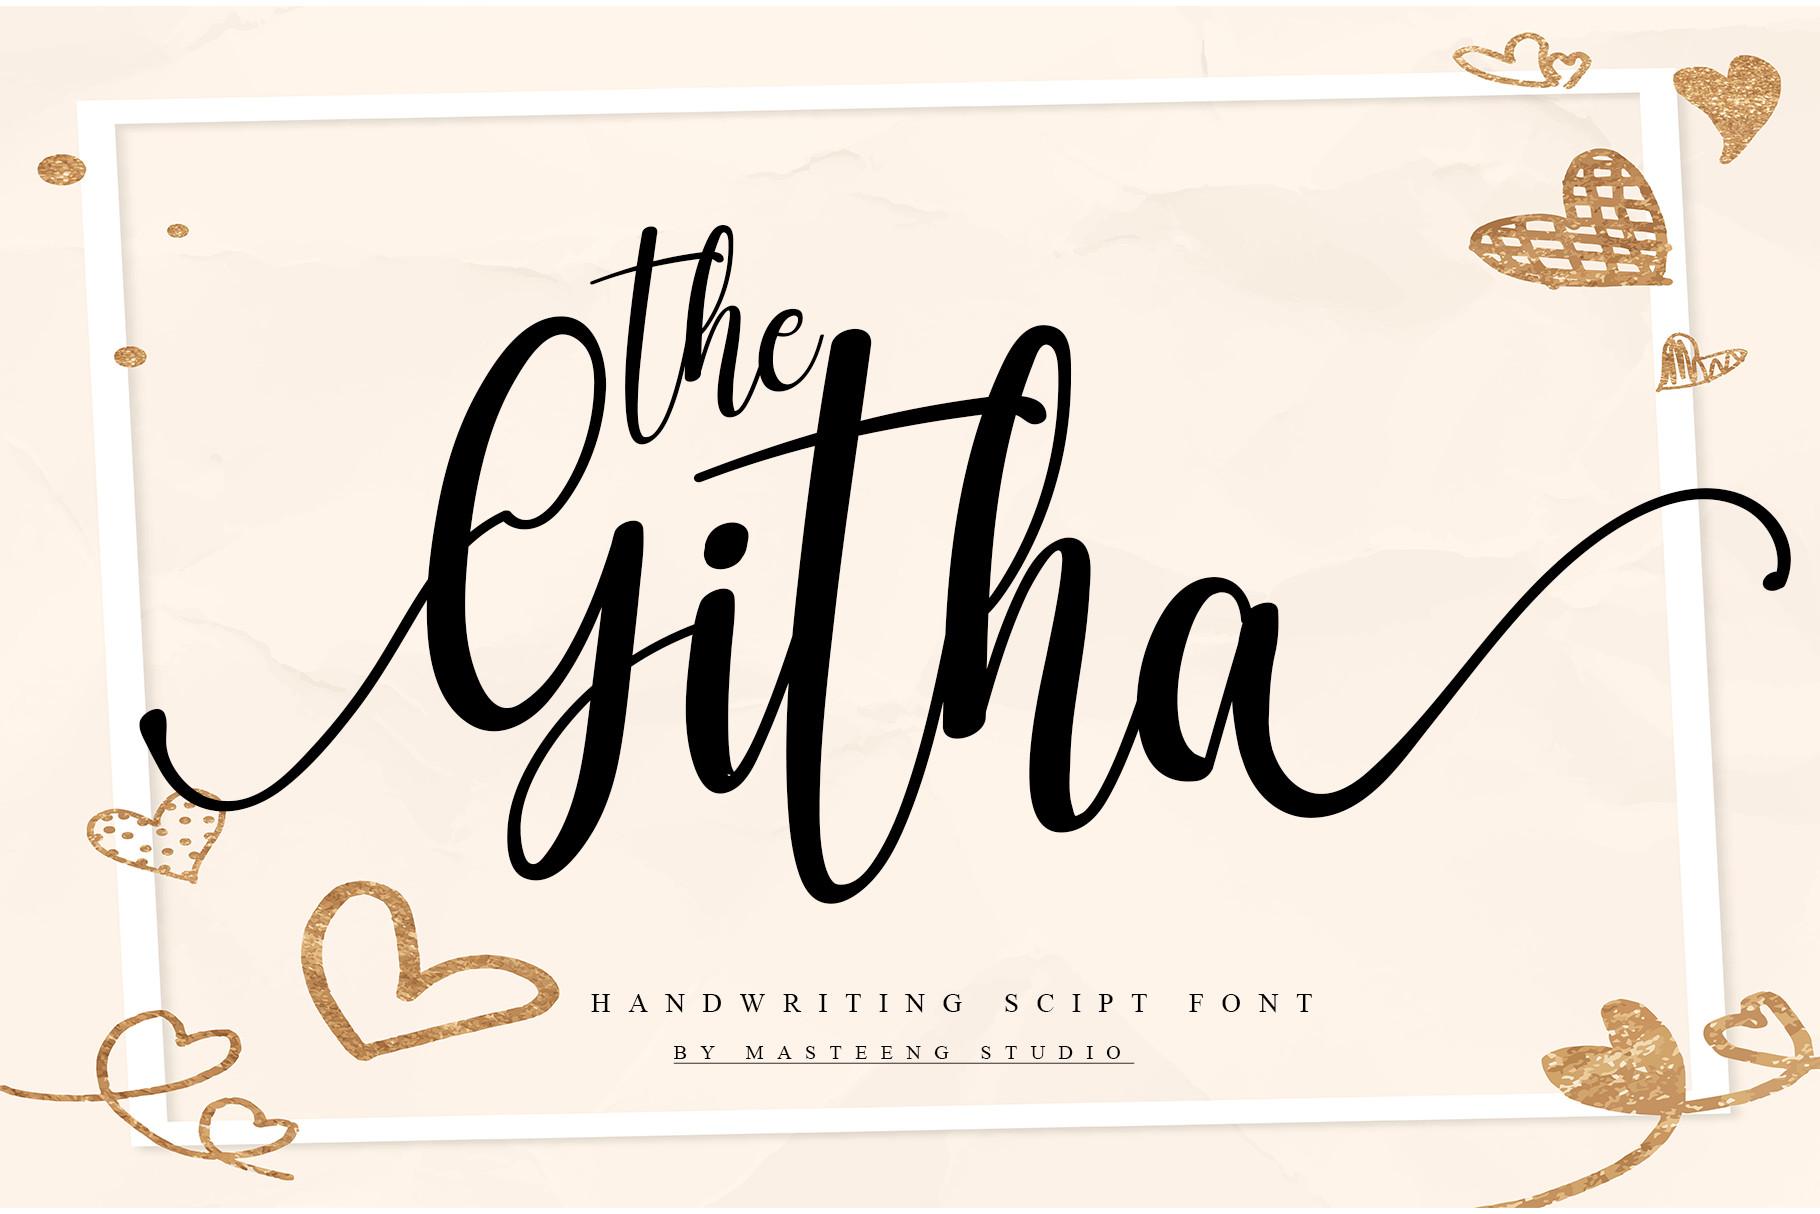 The Githa Font